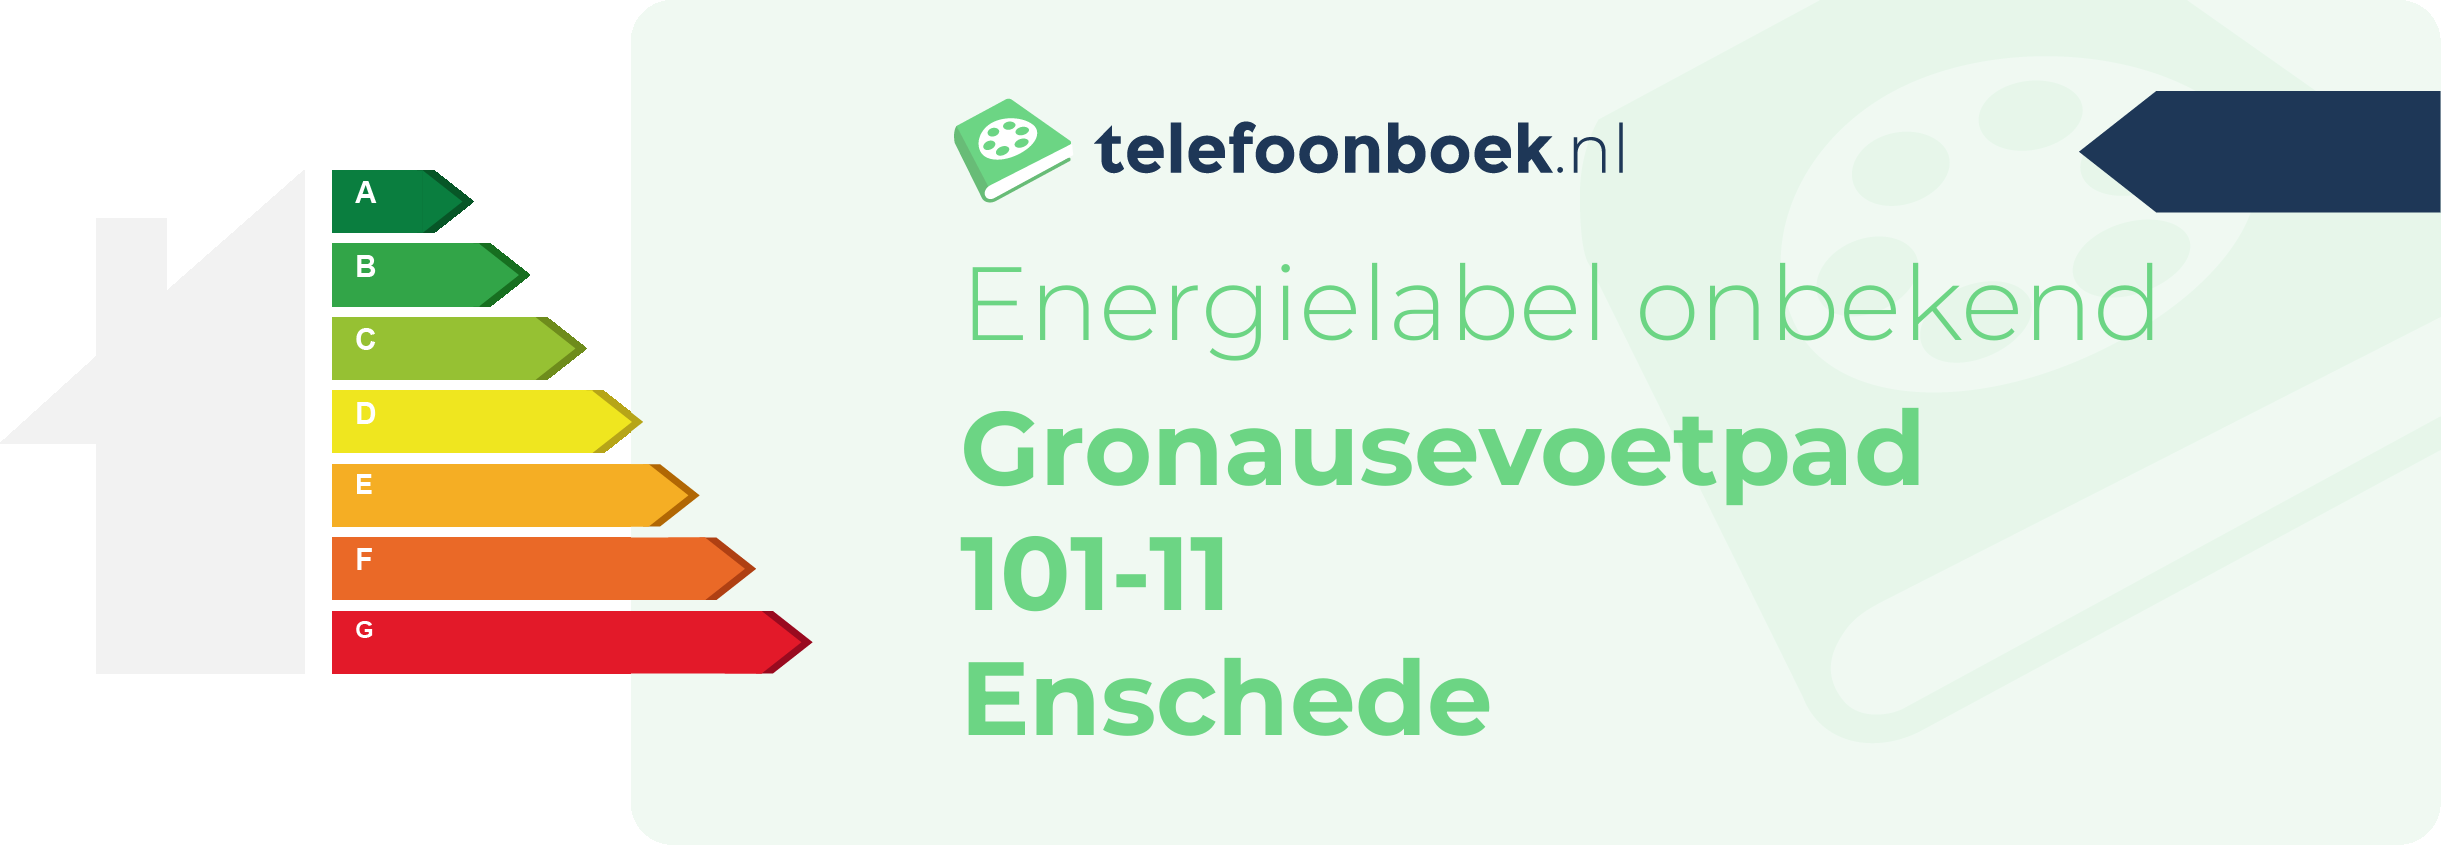 Energielabel Gronausevoetpad 101-11 Enschede